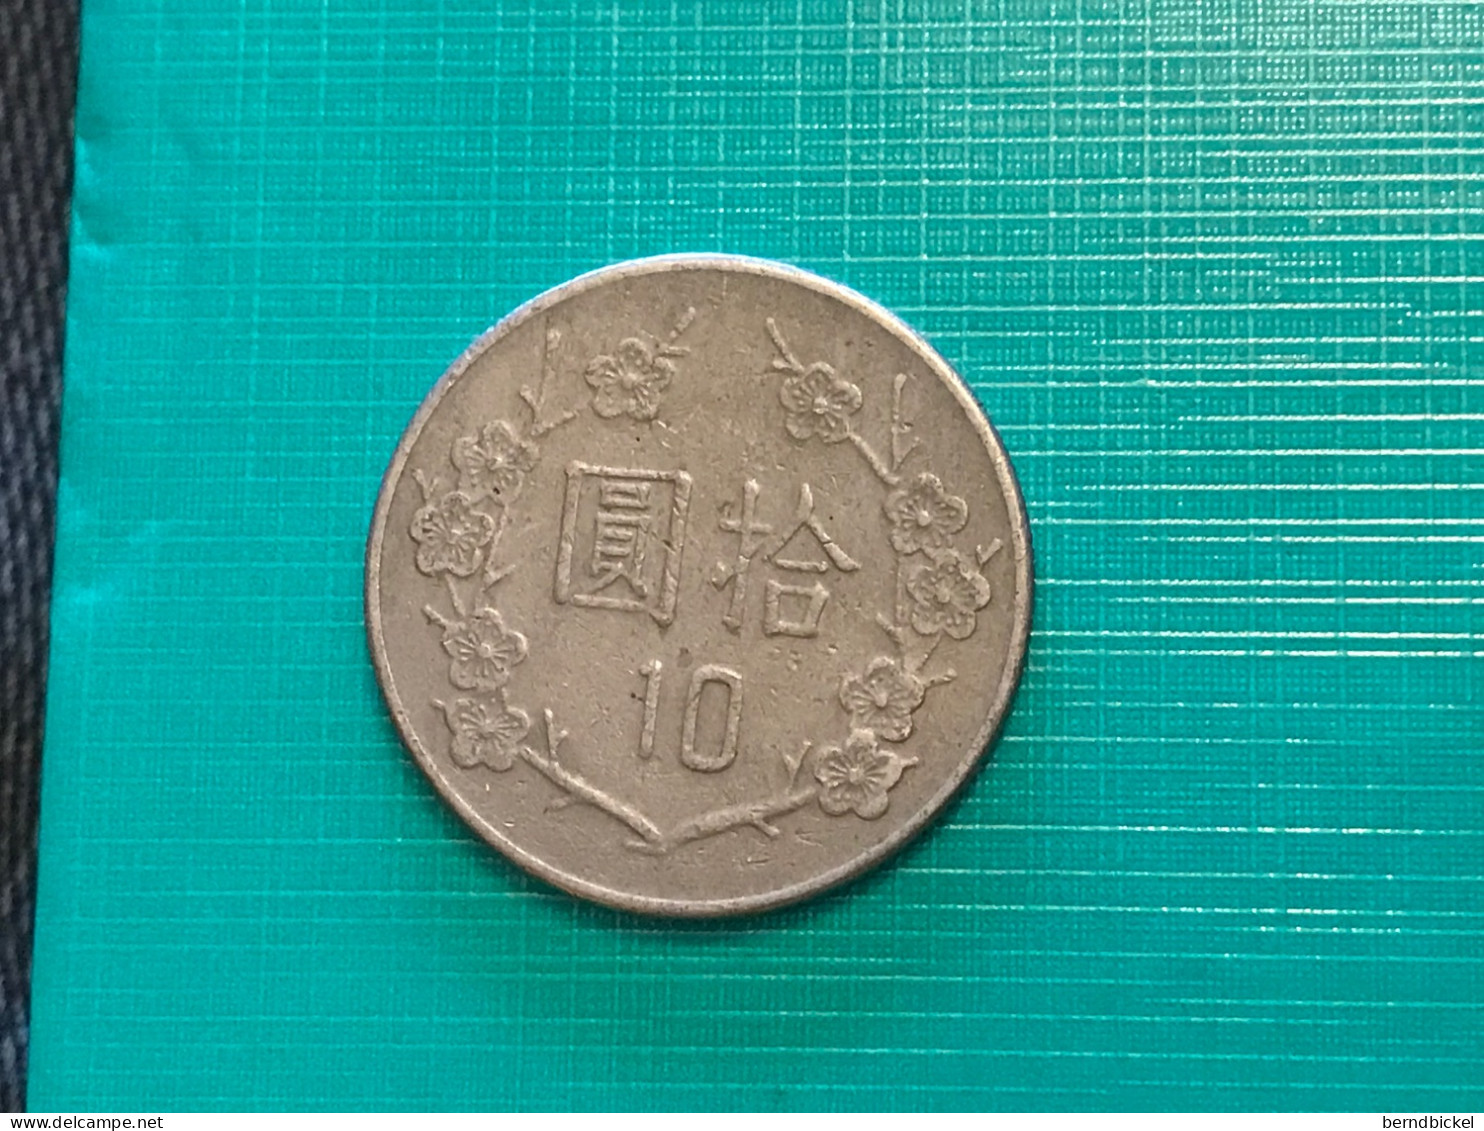 Münze Münzen Umlaufmünze Taiwan 10 Dollar 1982 - Taiwán